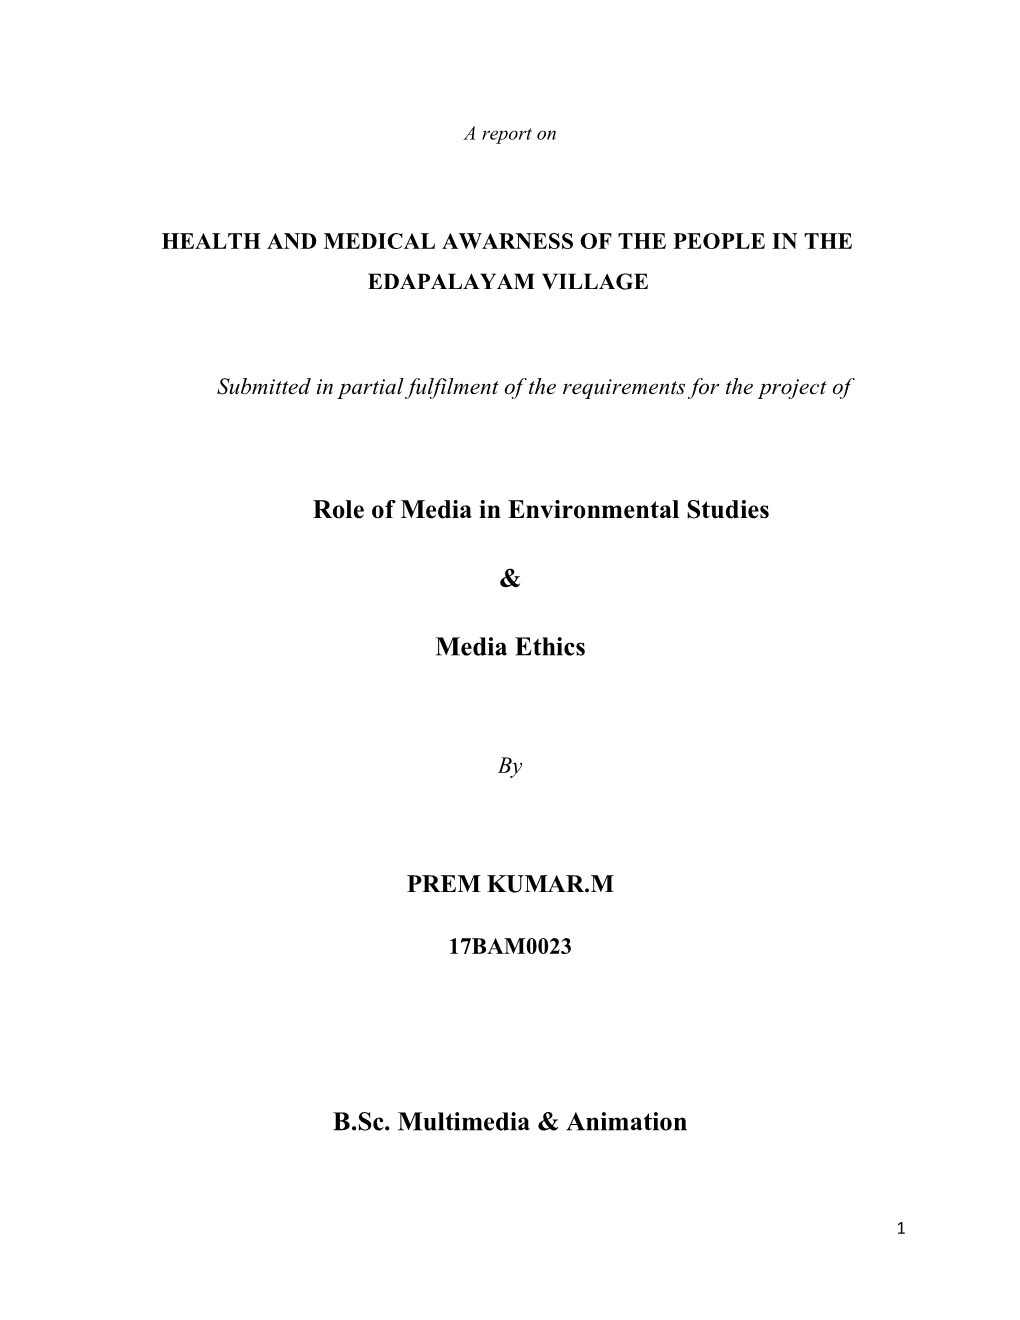 Role of Media in Environmental Studies & Media Ethics B.Sc